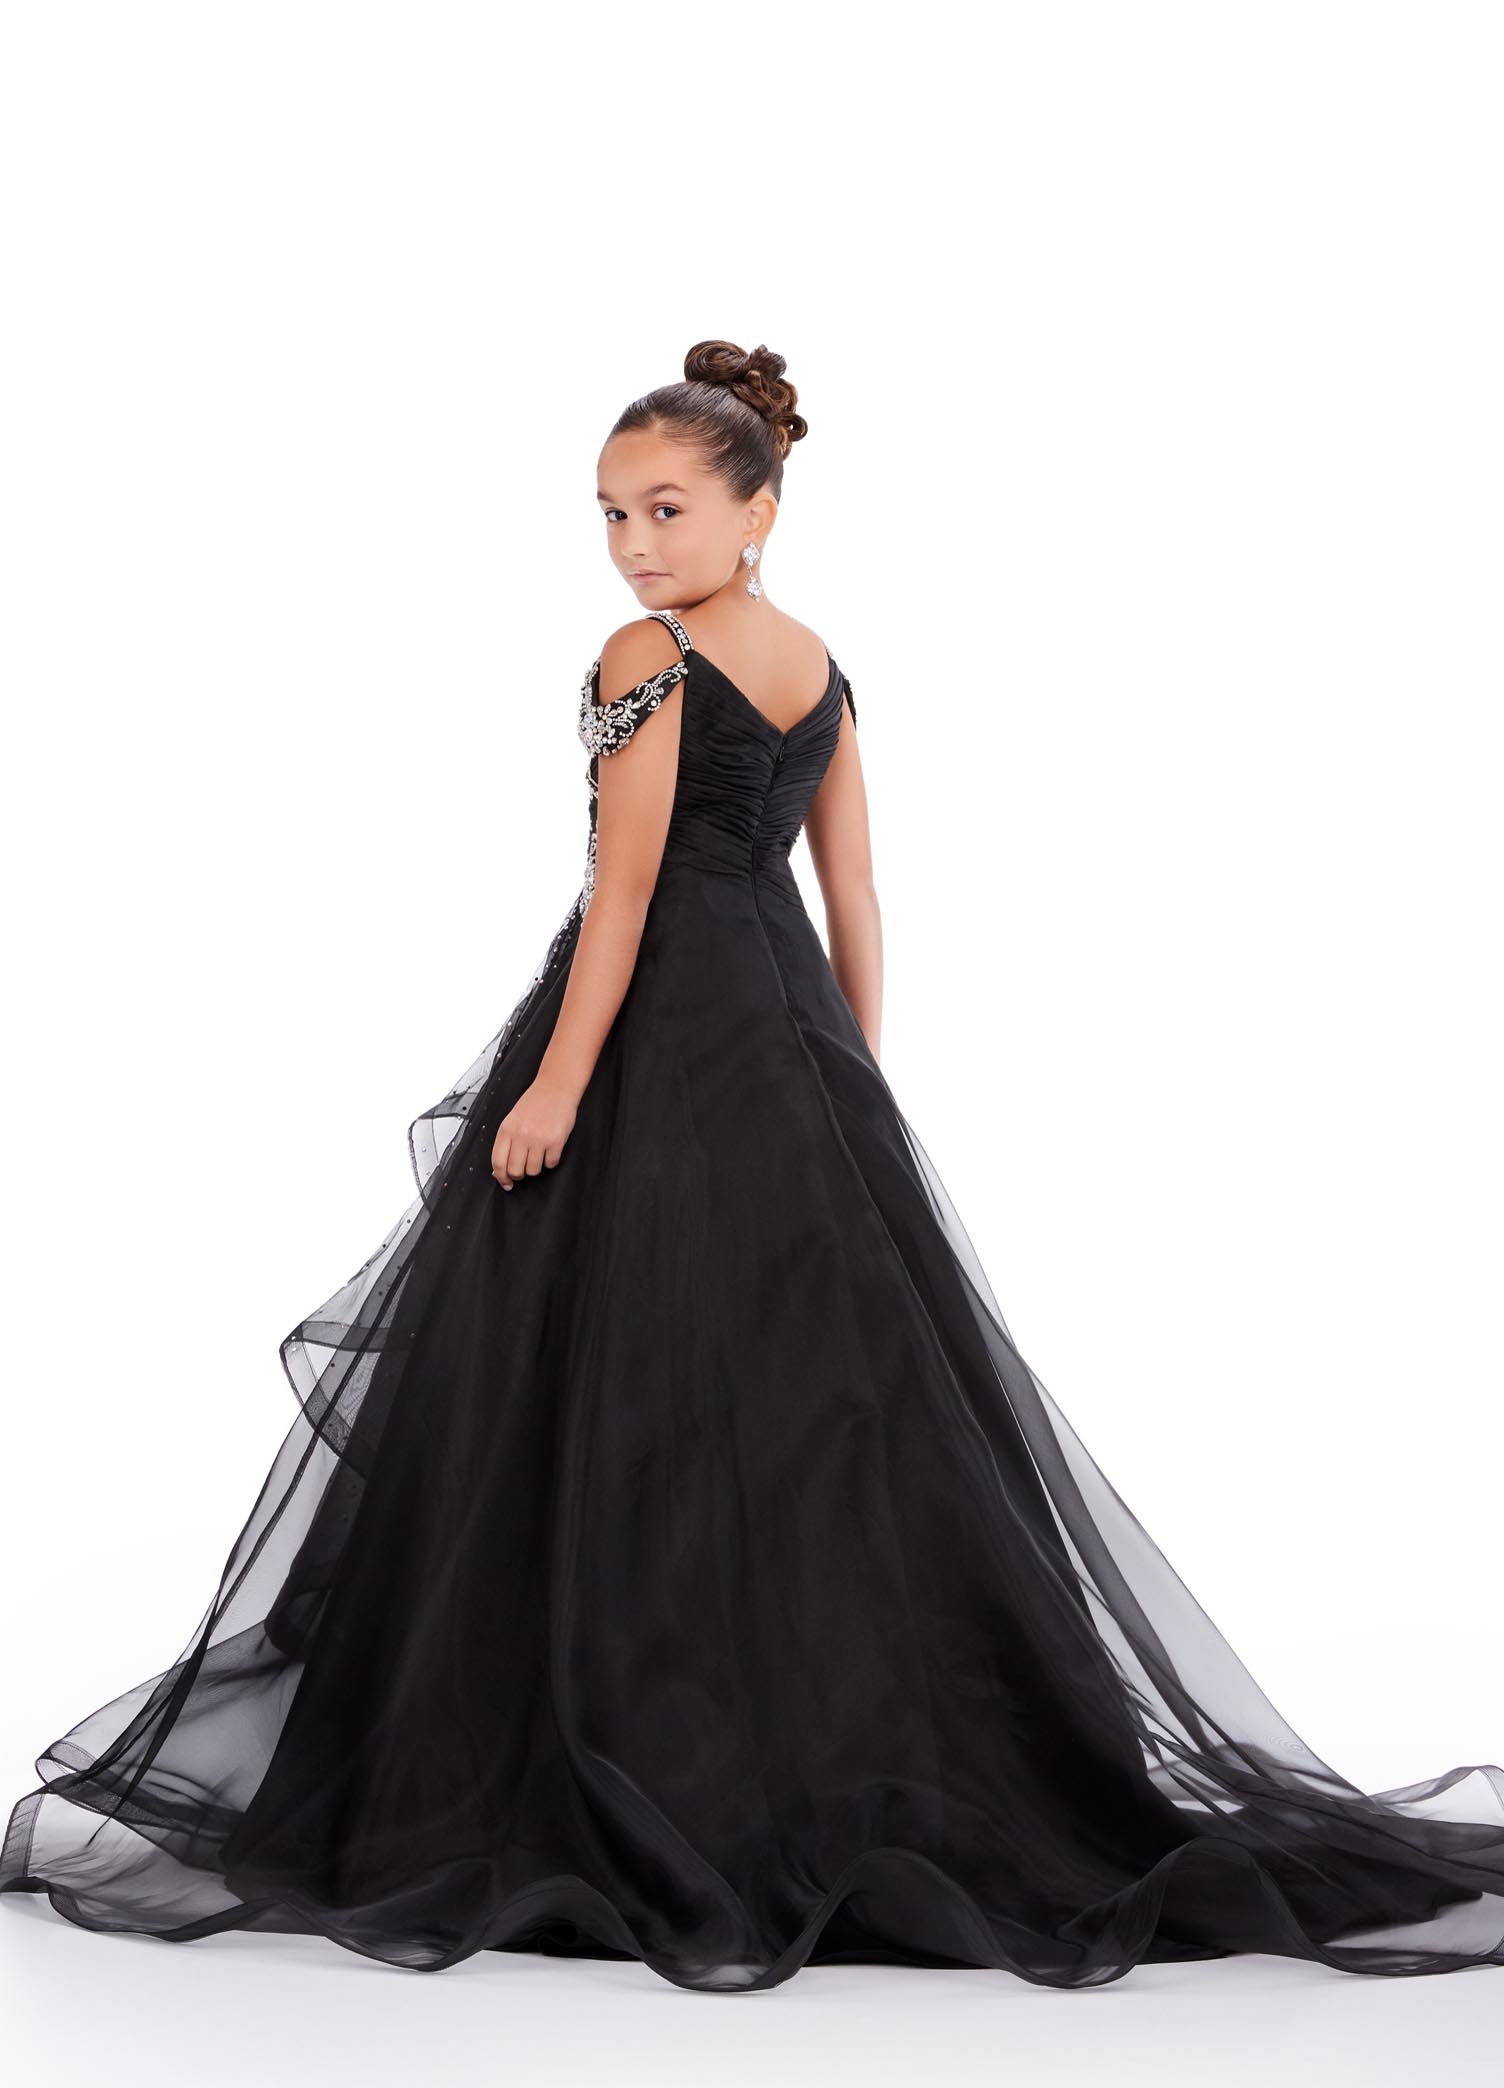 Gubotare New Years Dress Little Girls' Sequin Mesh Tull Dress Sleeveless  Flower Party Ball Gown,Black 13-14 Years - Walmart.com